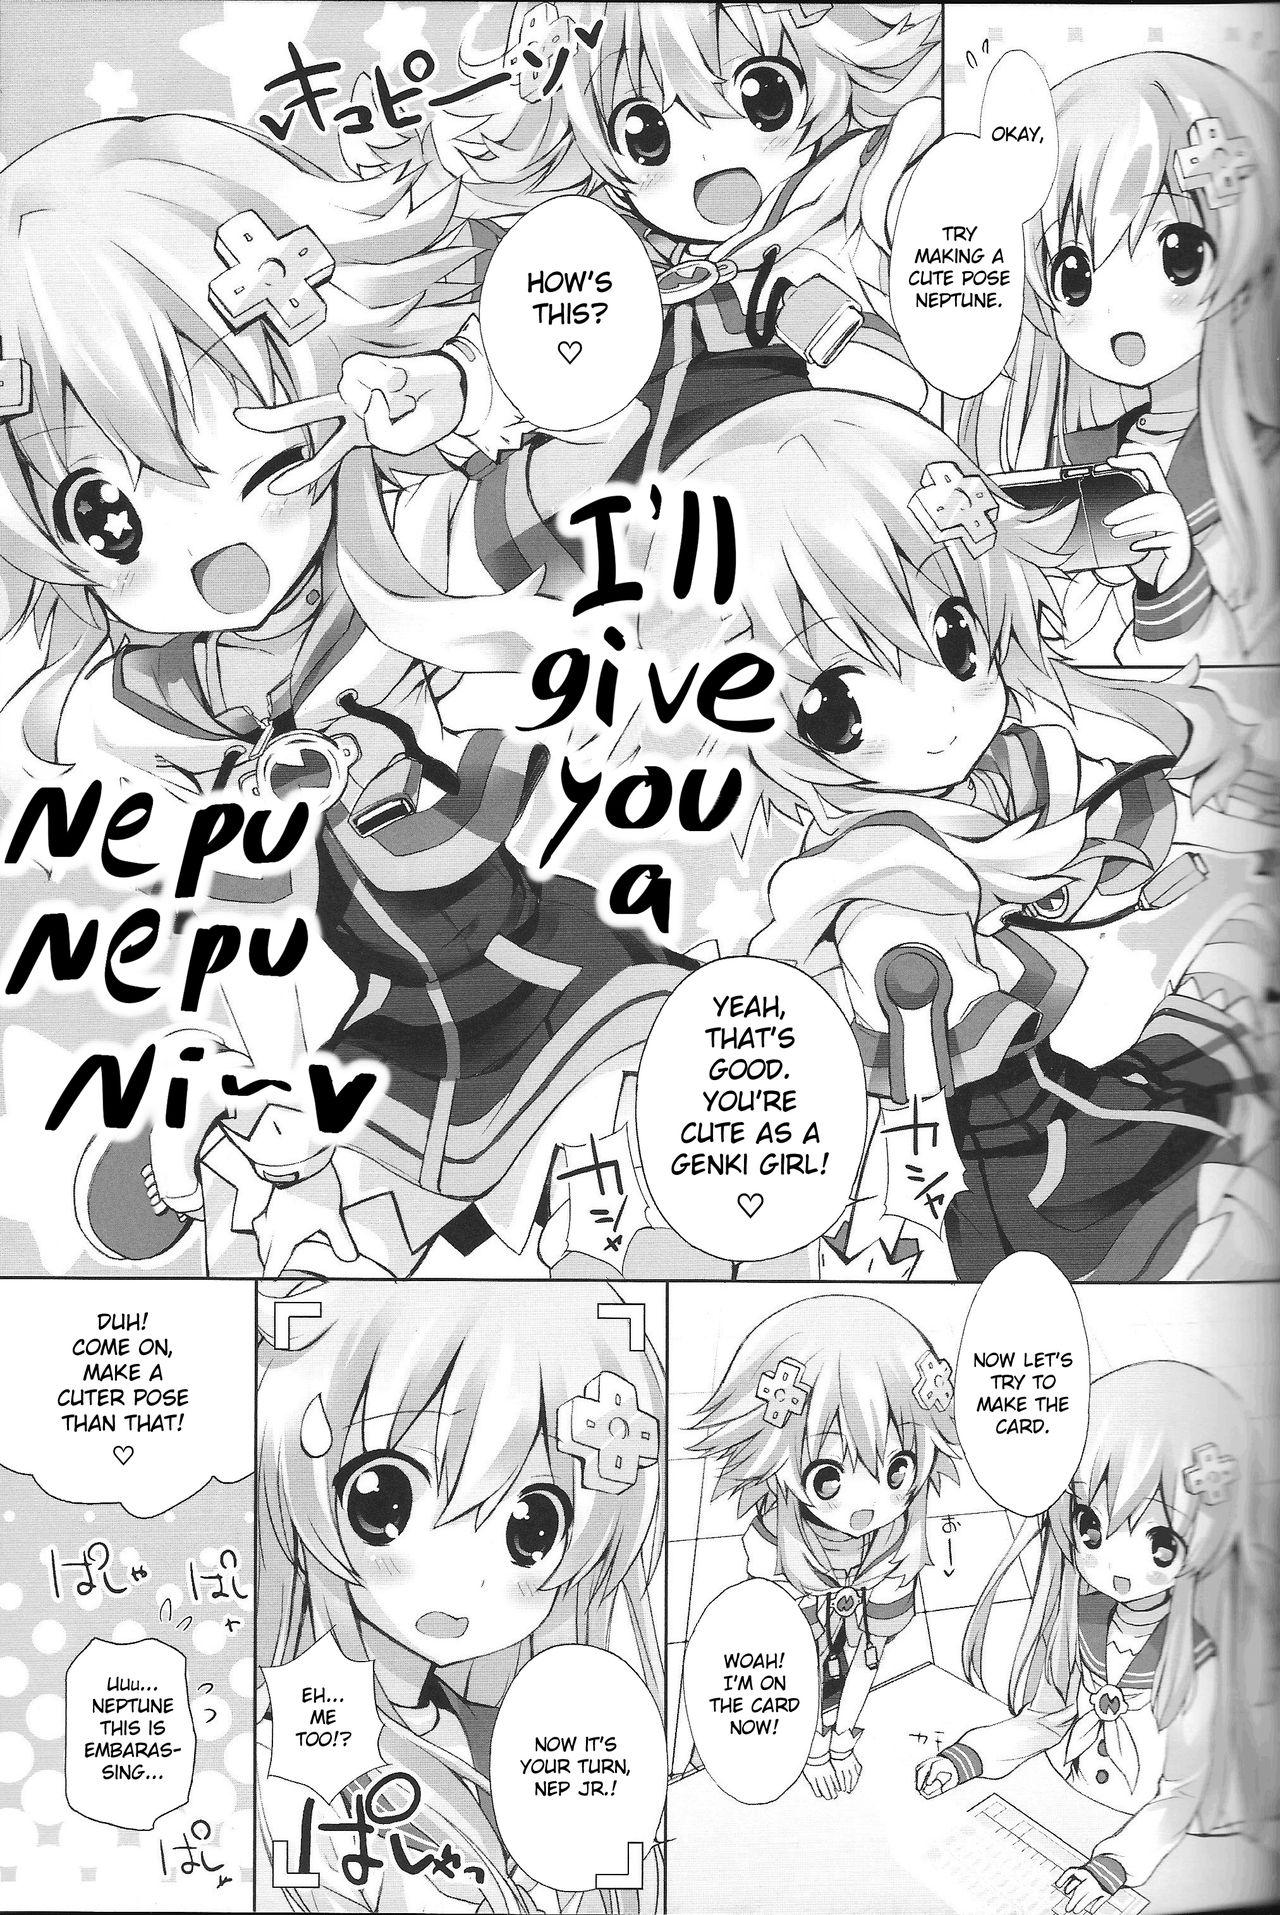 Girls Fucking NEPPLUS - Hyperdimension neptunia One - Page 6